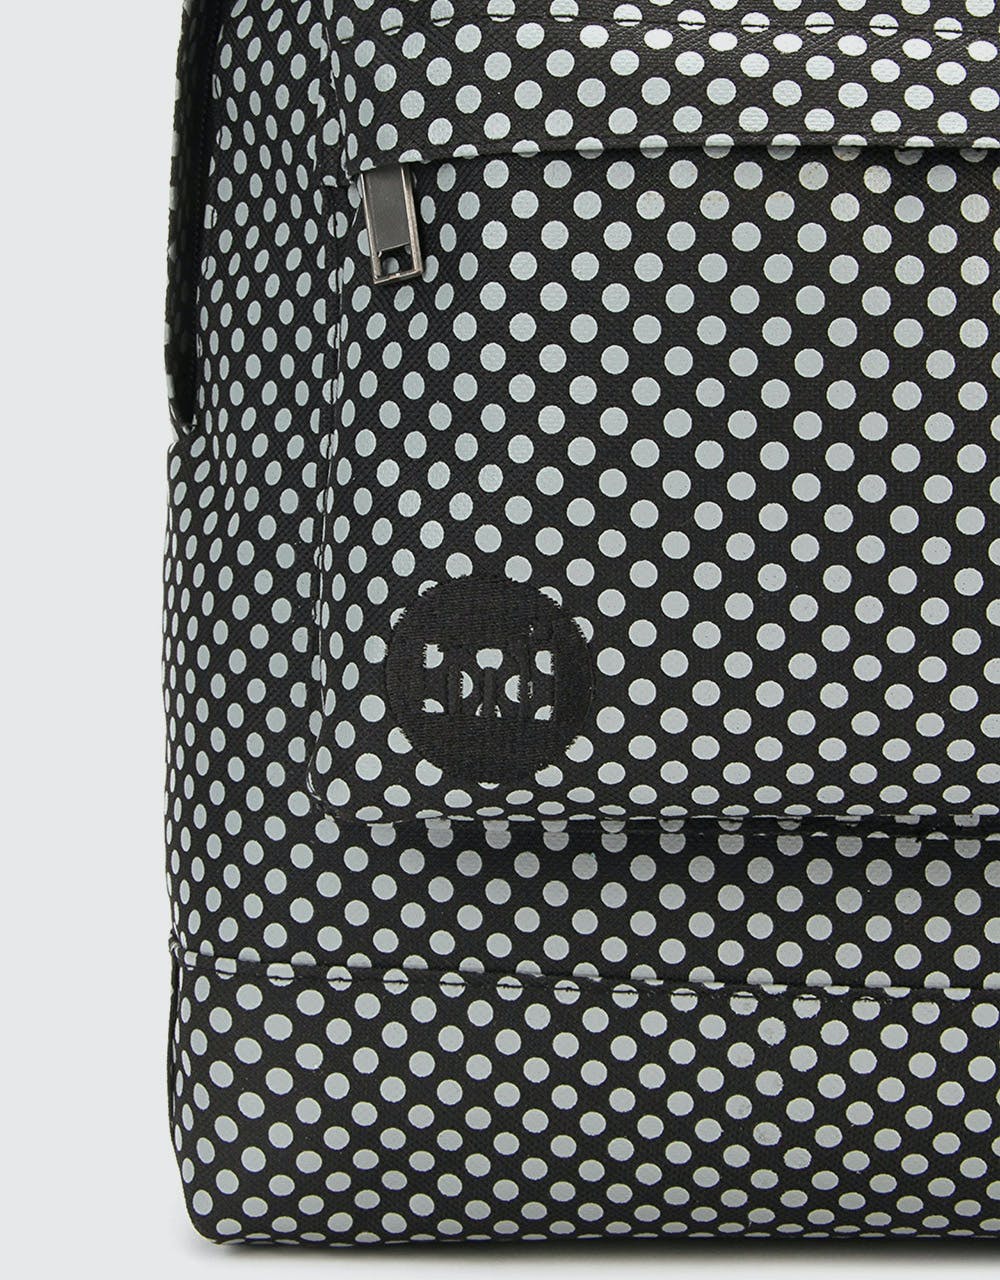 Mi-Pac Microdot Backpack - Black